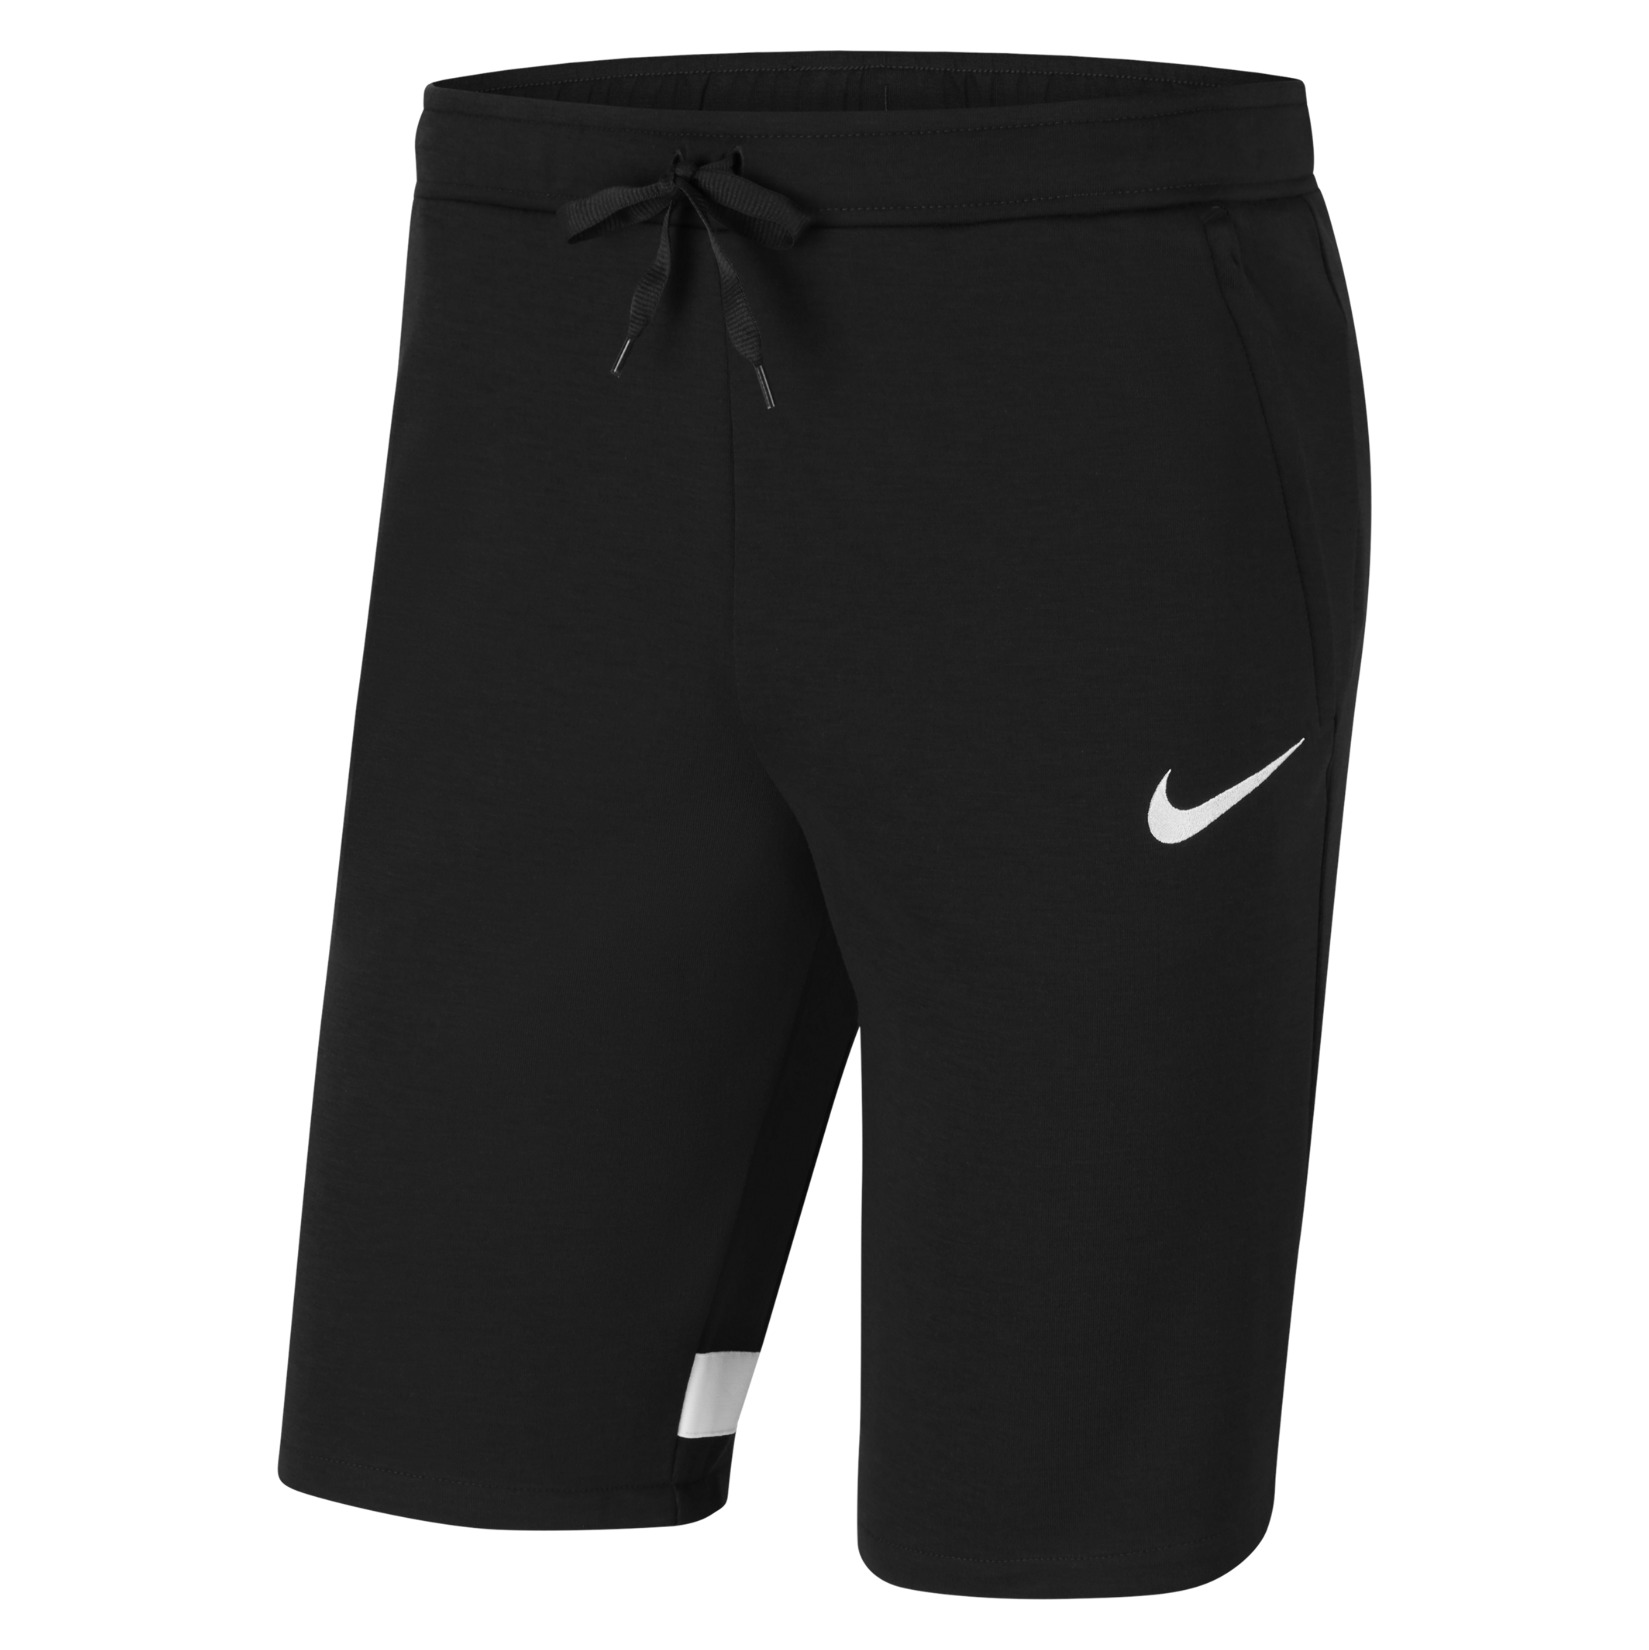 Nike Strike Fleece Shorts